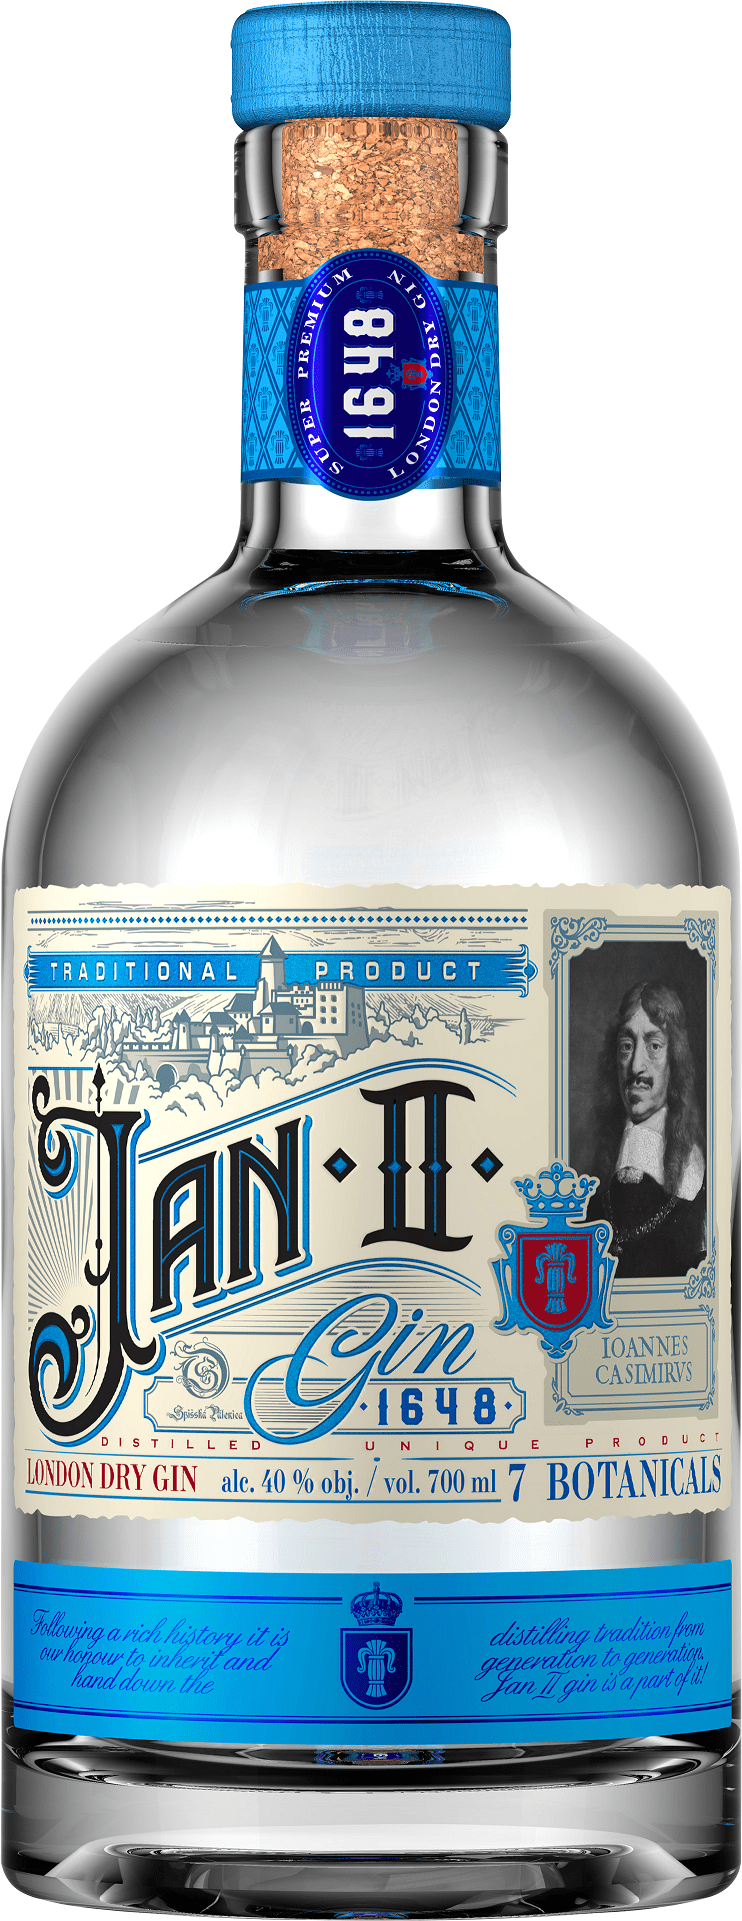 Jan II London Dry Gin